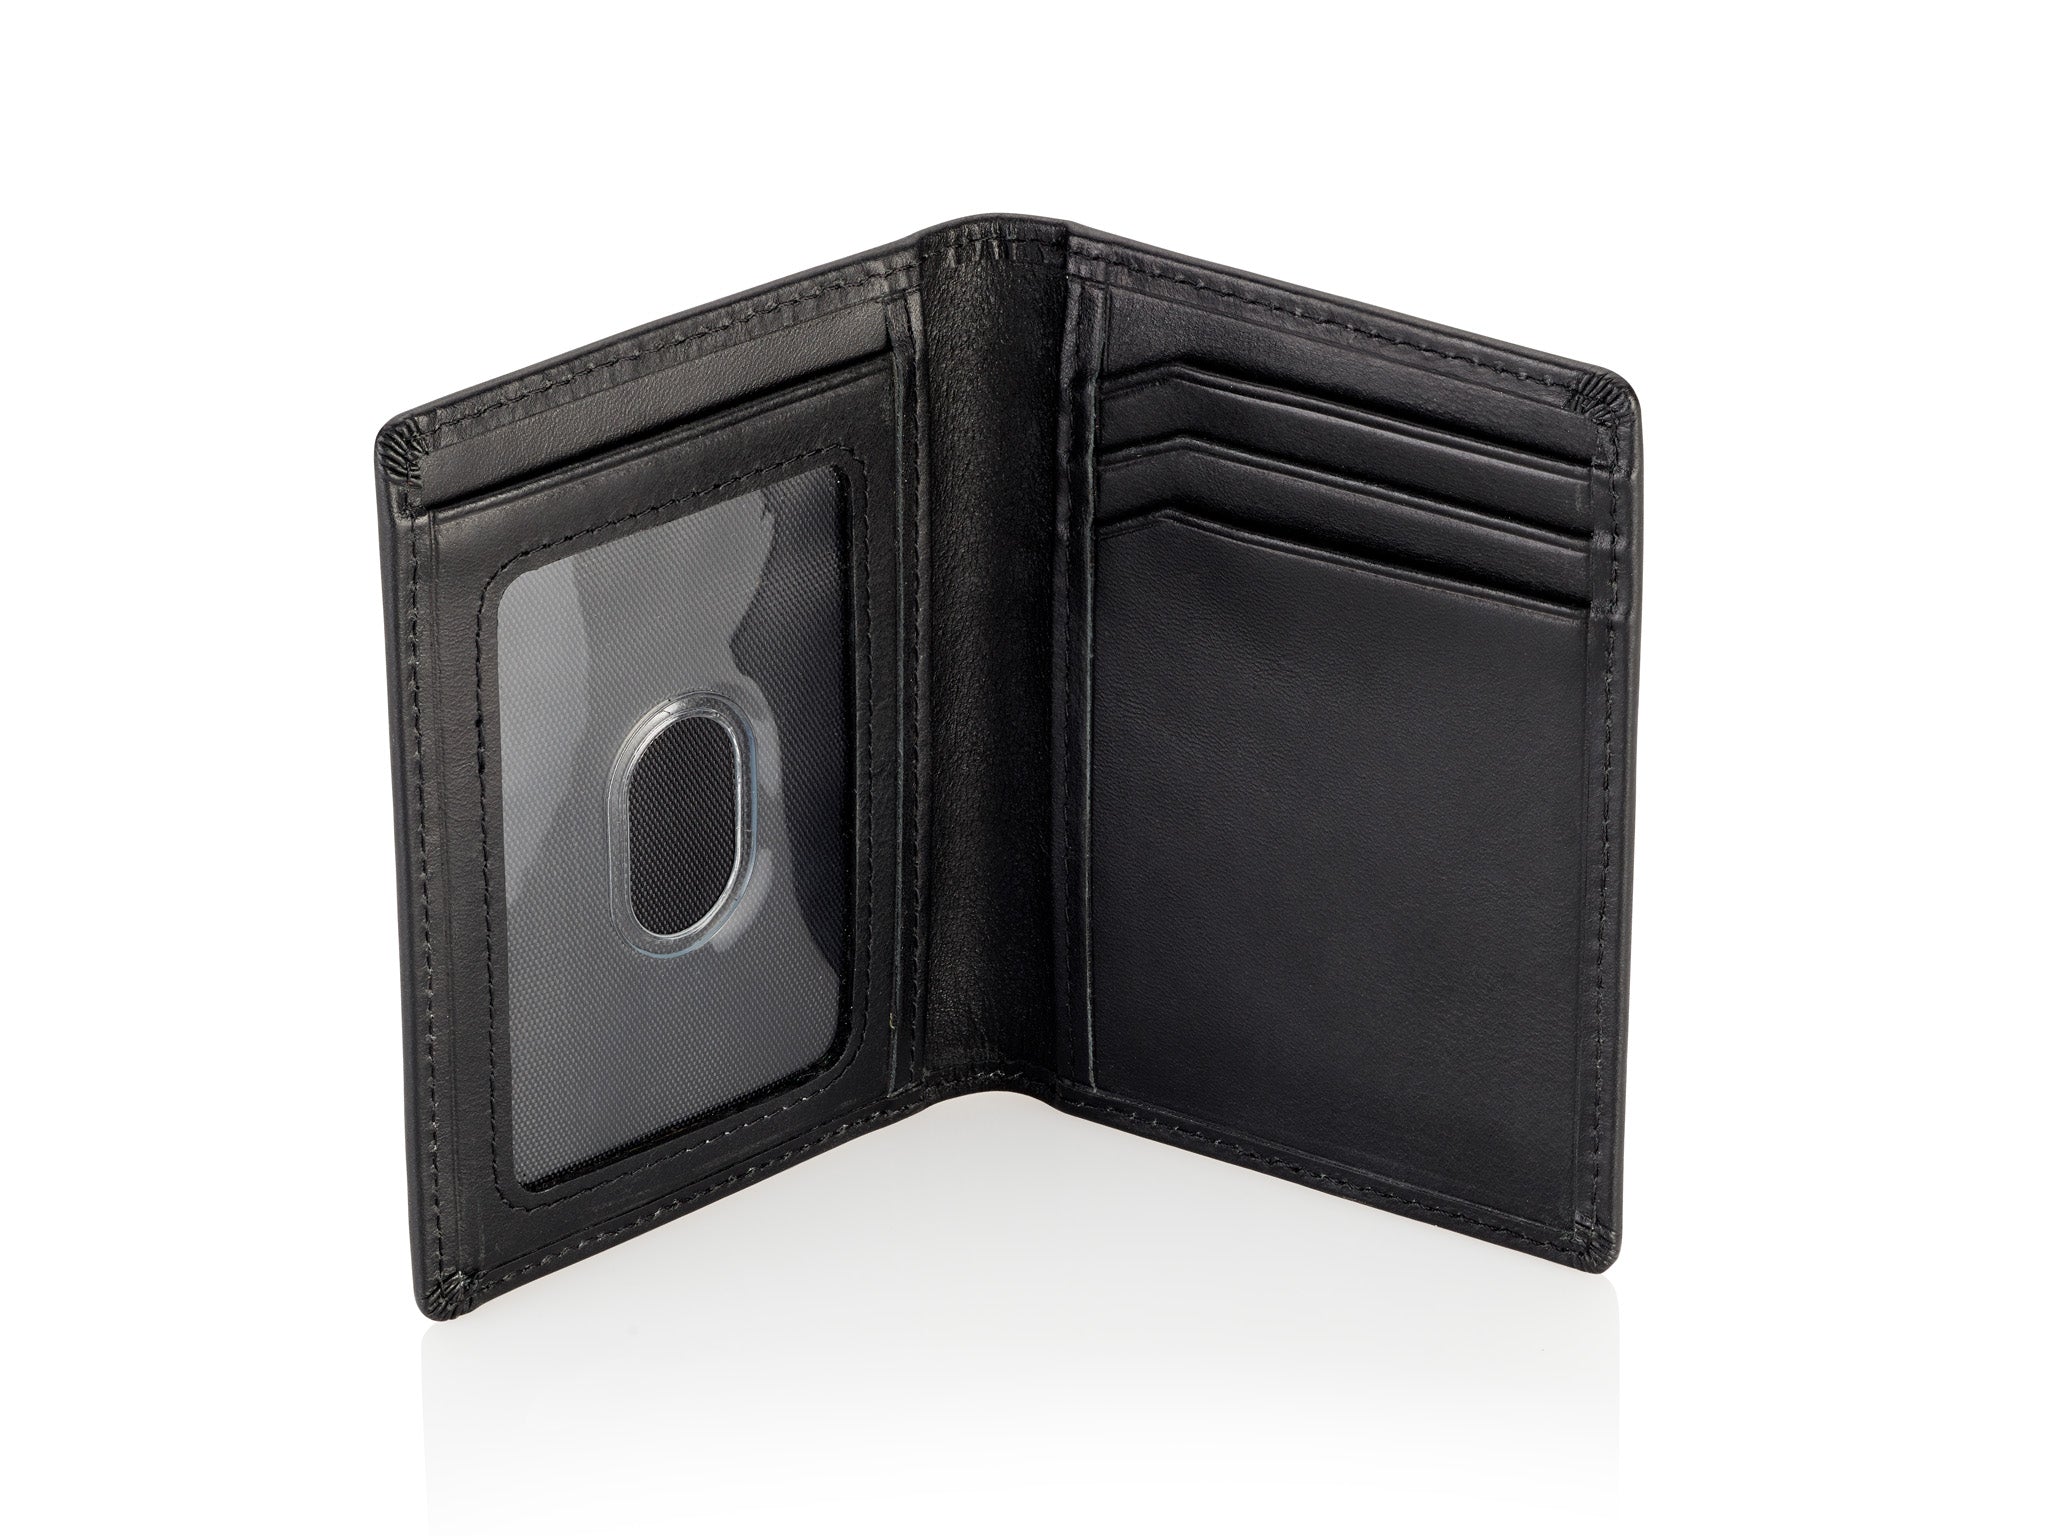 Men's Slim Front Pocket Wallet - RFID Blocking, Thin Minimalist Bifold -  Stealth Mode Leather